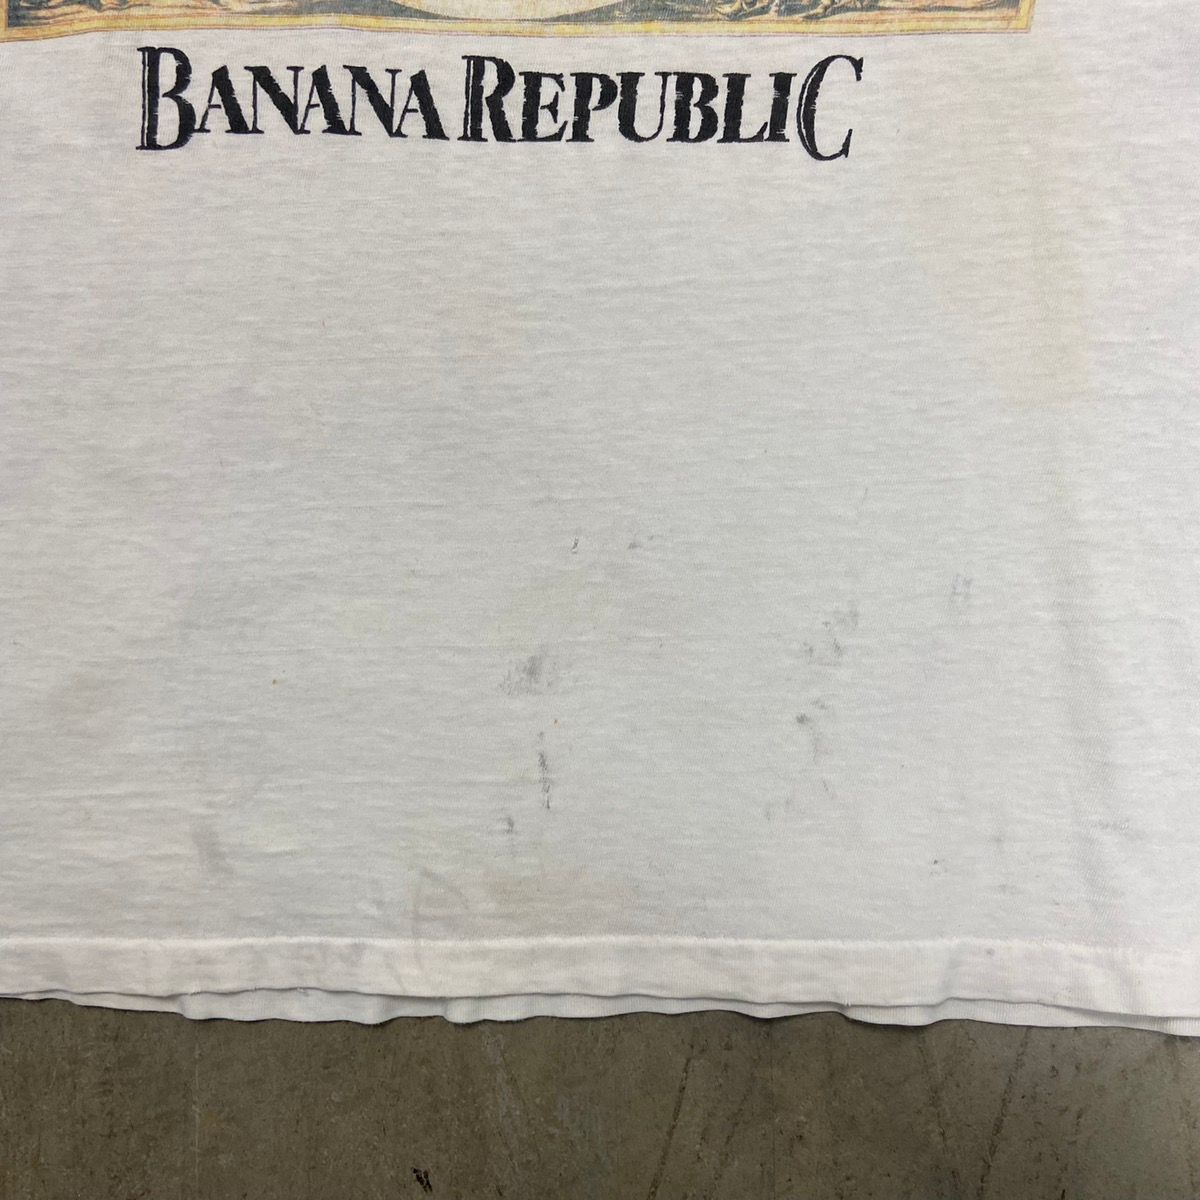 Banana Republic Vintage 90s Banana Republic Single Stitch Art T-Shirt Size US L / EU 52-54 / 3 - 5 Preview